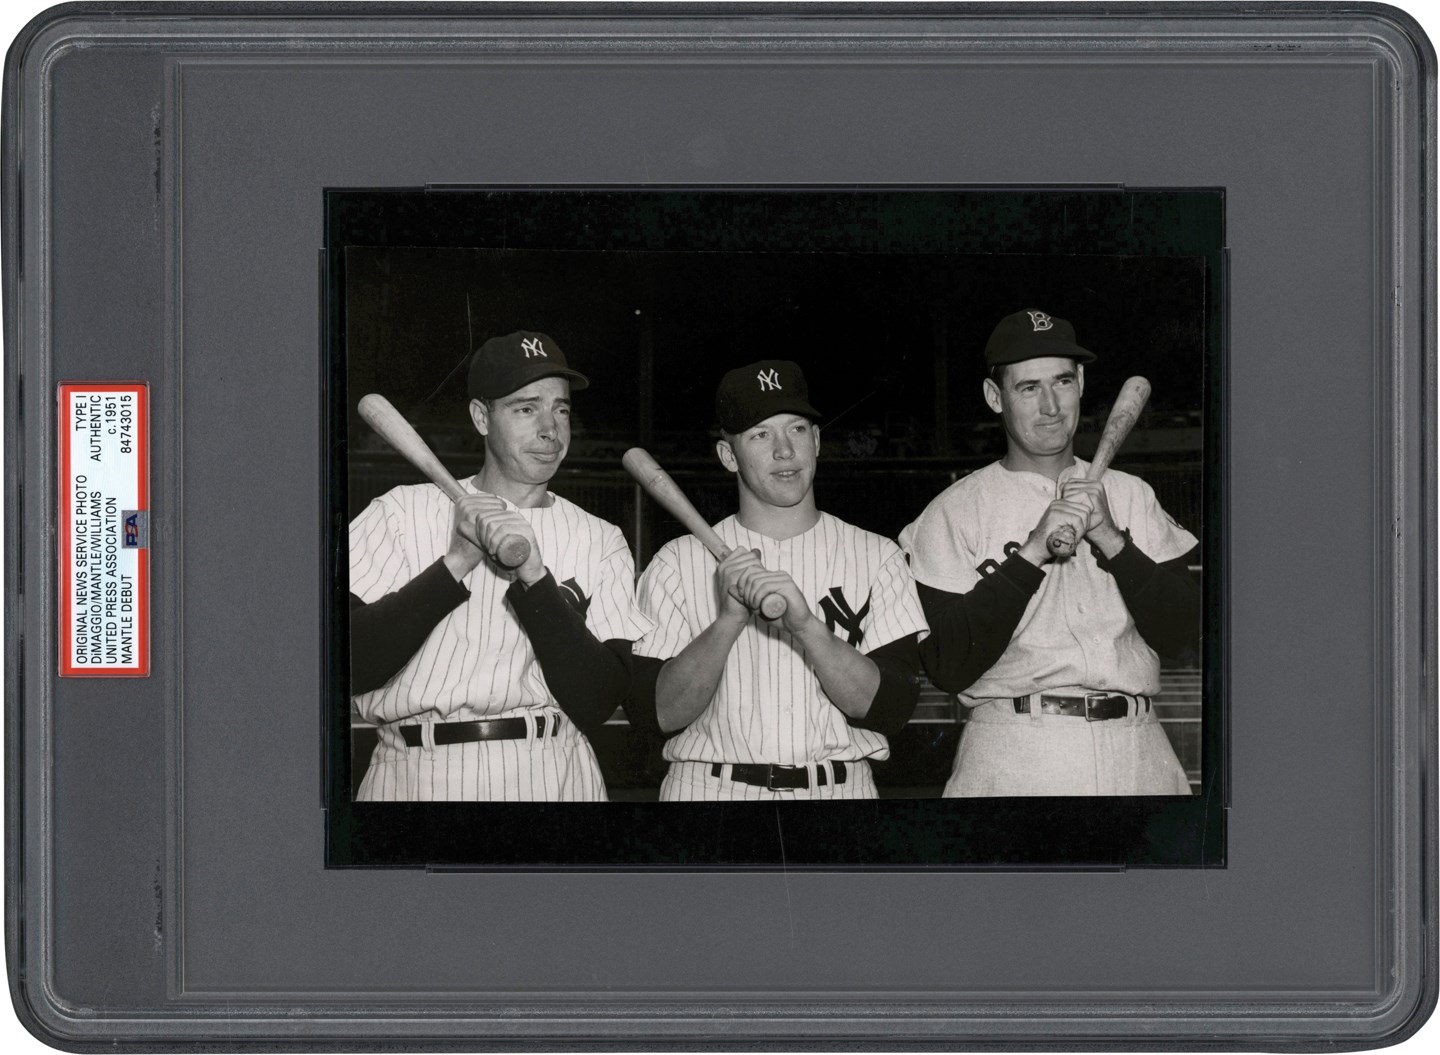 1951 Mickey Mantle MLB Debut Photograph w/DiMaggio & Williams (PSA Type I)